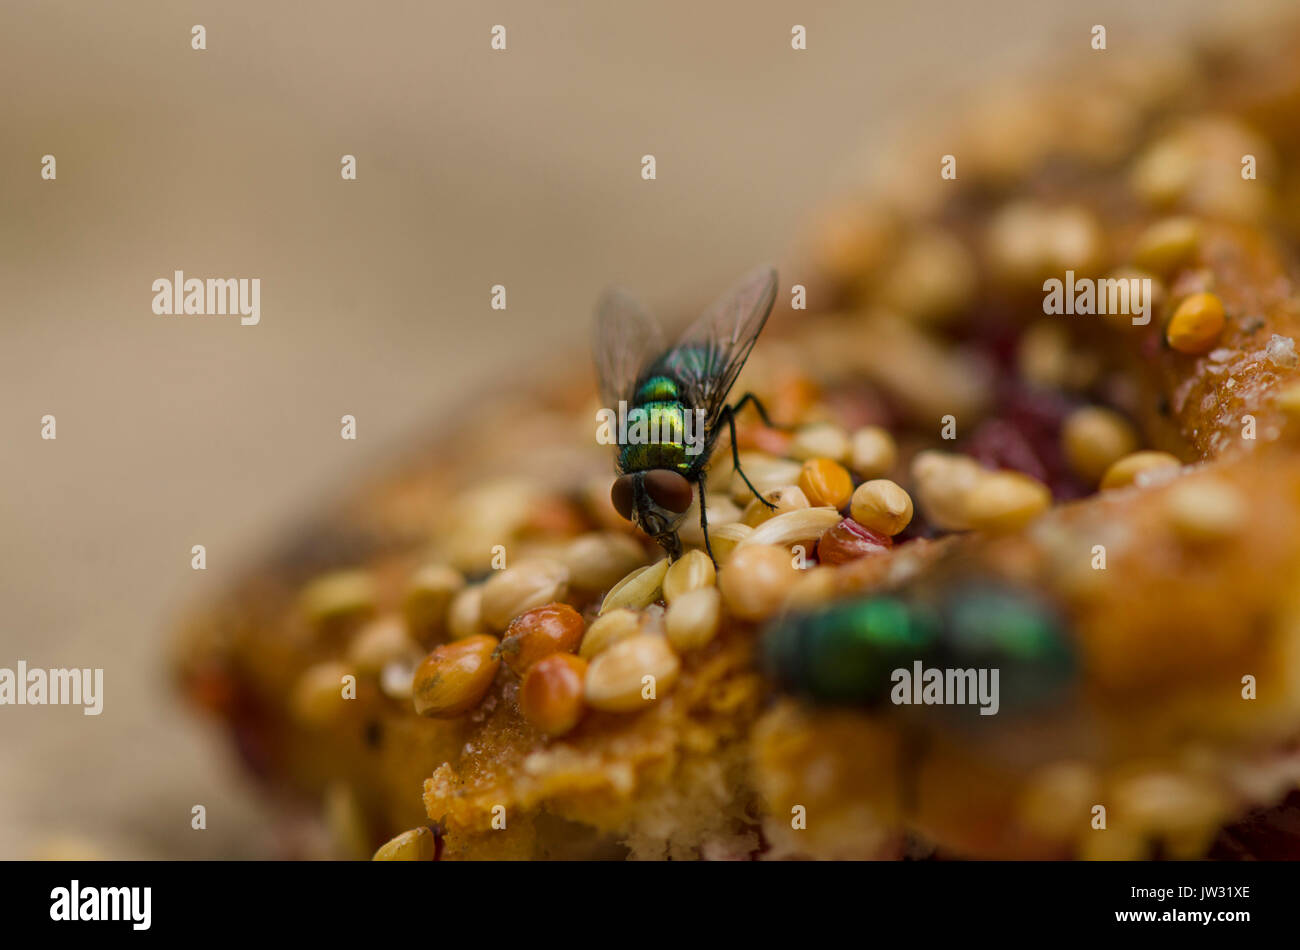 Common green bottle fly, Phoenicia sericata on piece of food. Stock Photo